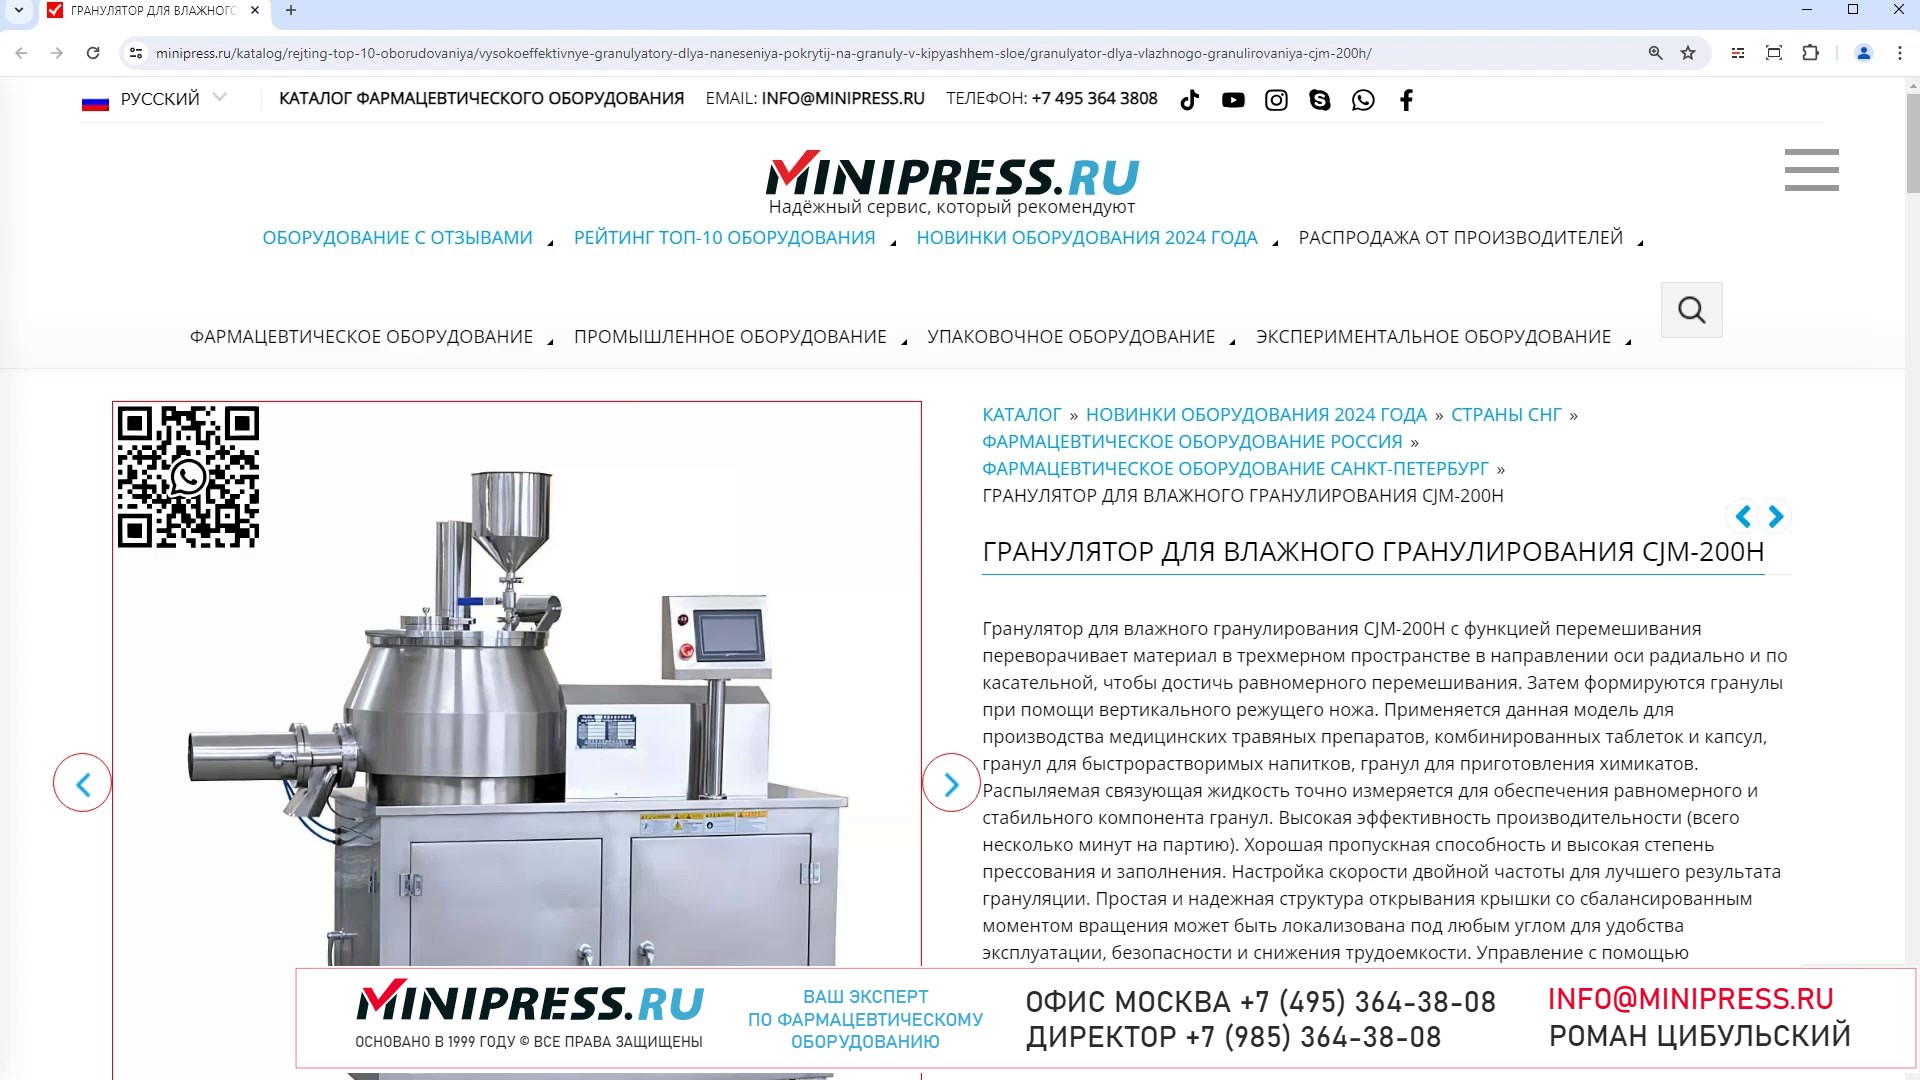 Minipress.ru Гранулятор для влажного гранулирования CJM-200H